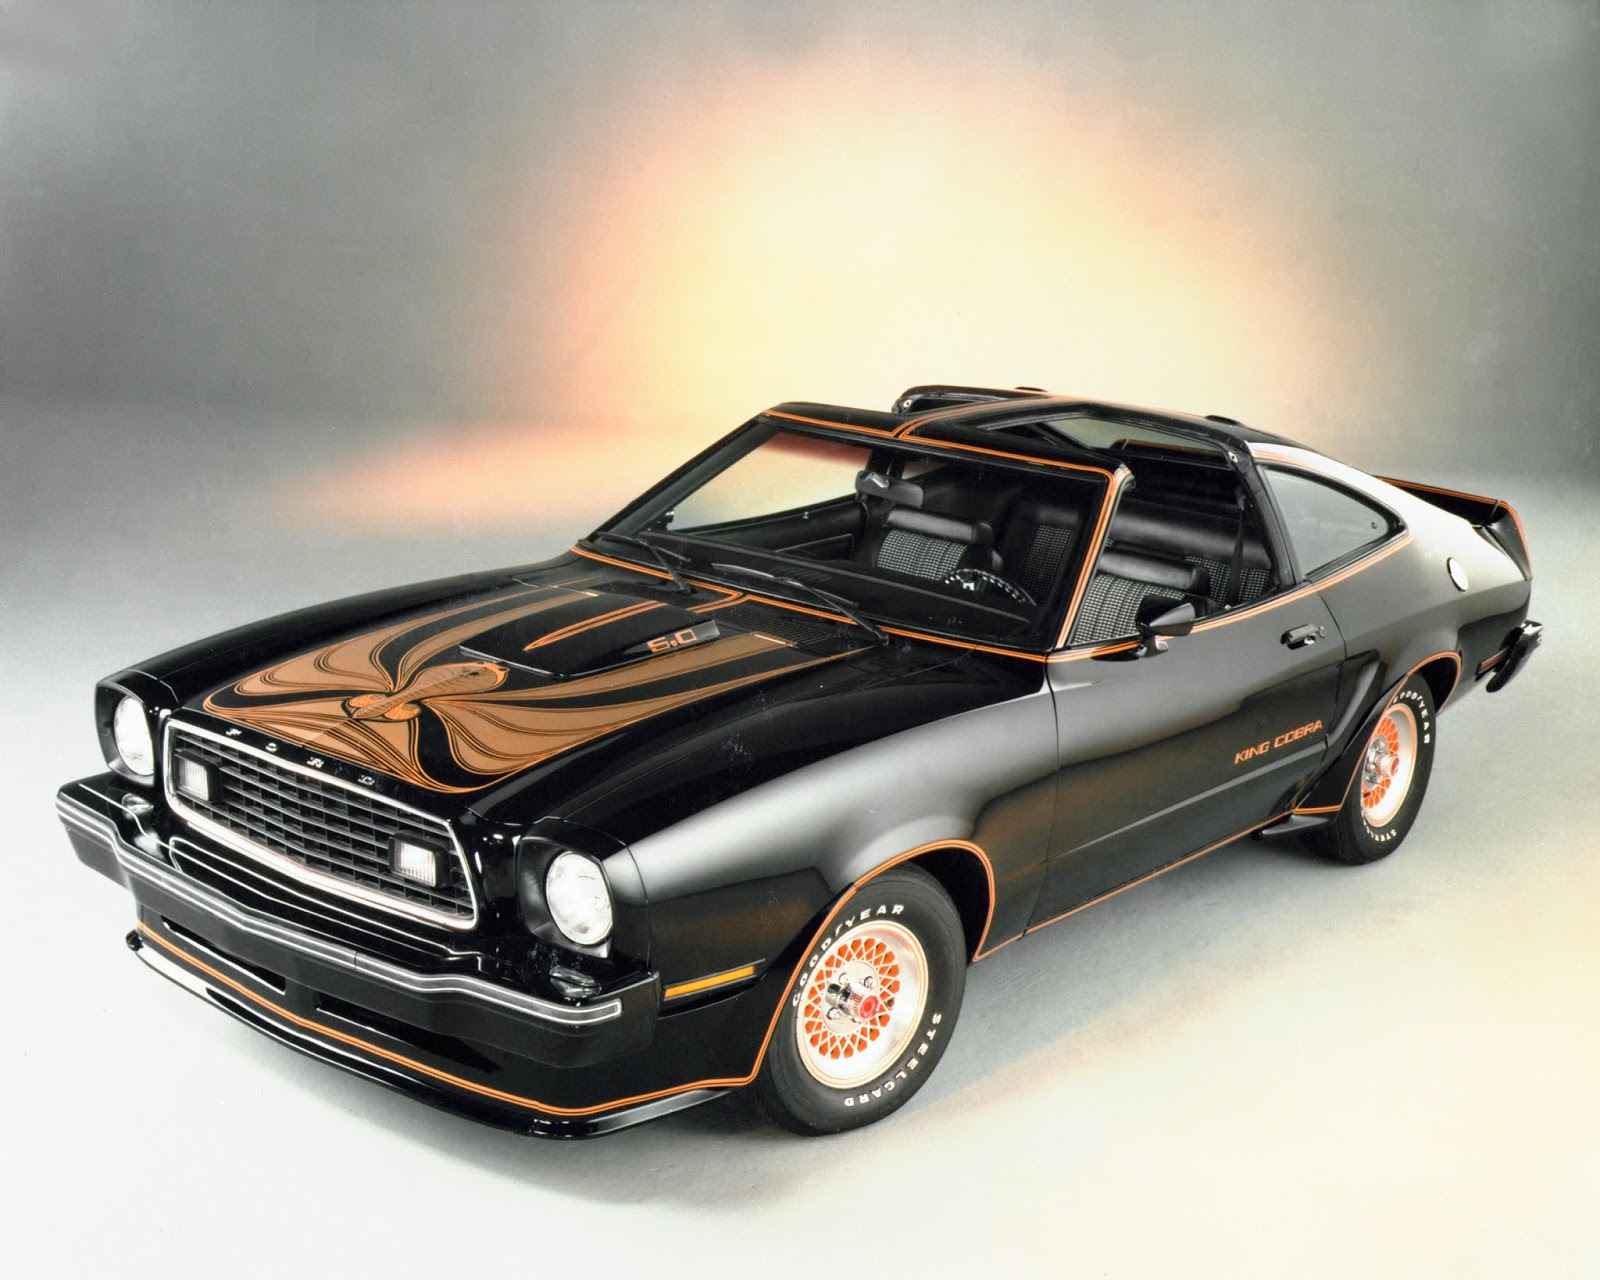 1978 Ford Mustang II King Cobra Πώς γιορτάζει η Mustang τα 55 της χρόνια;